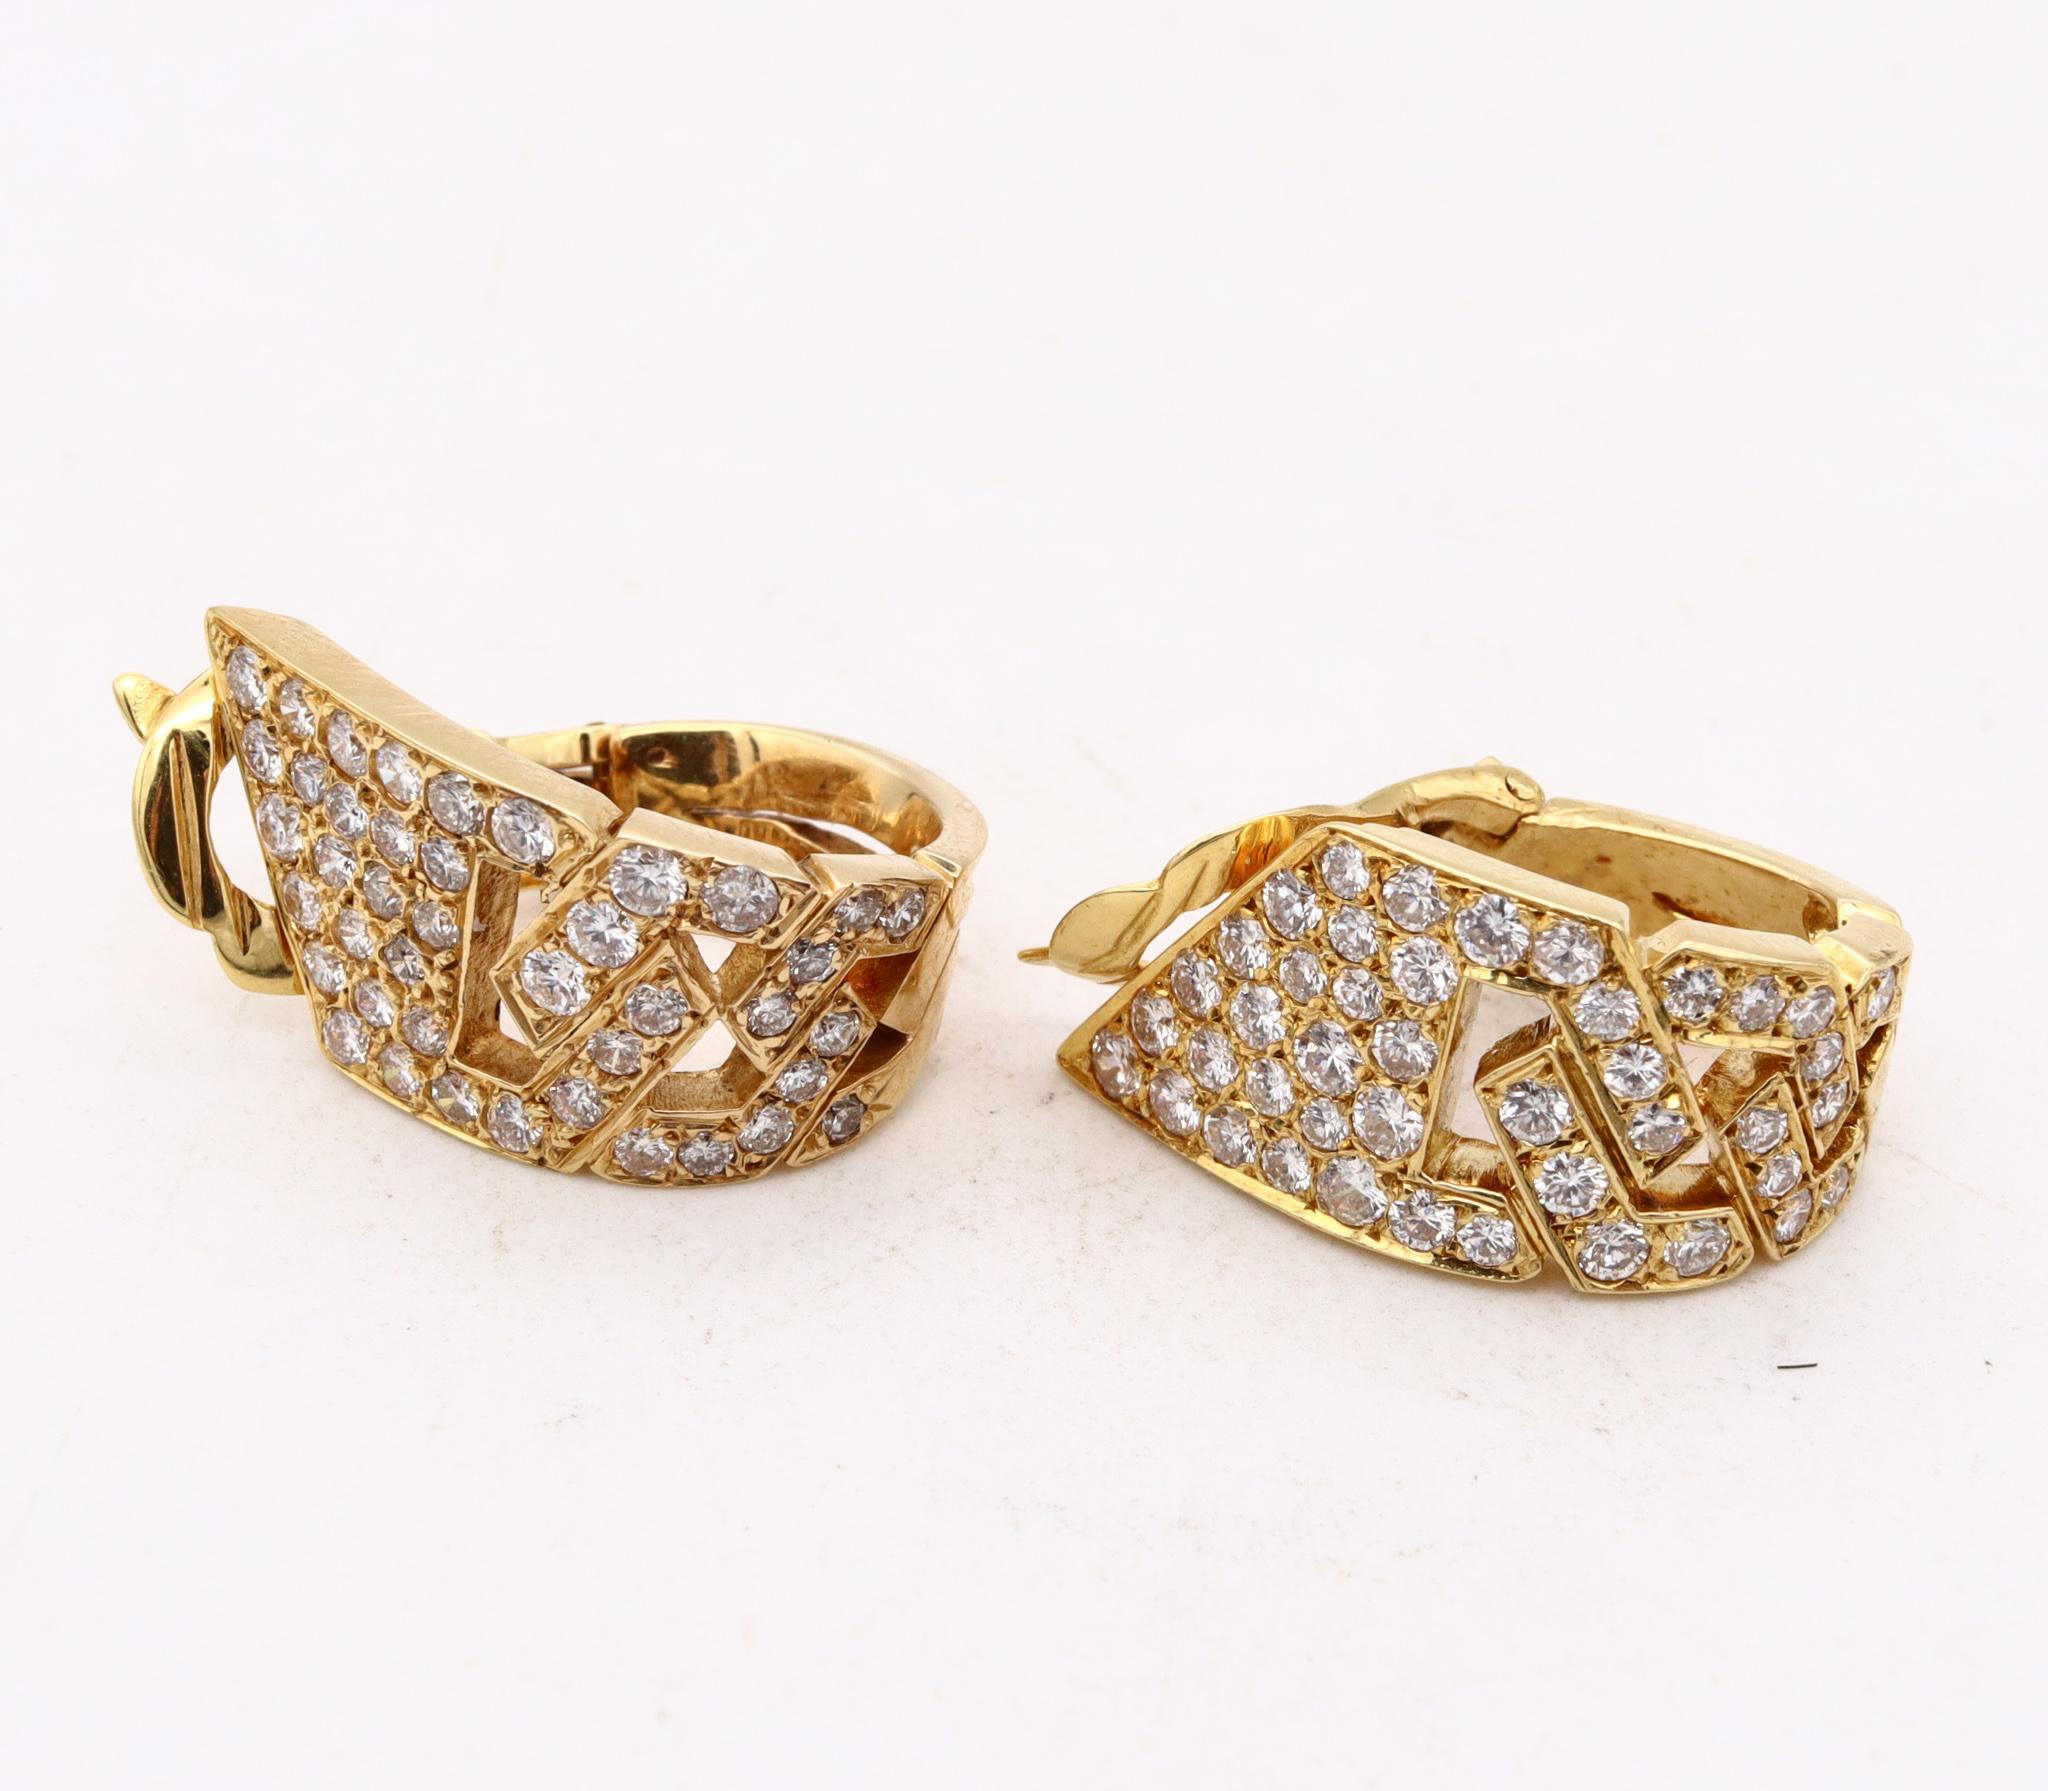 Brilliant Cut Van Cleef & Arpels 1970 Paris Hoop Clip Earrings in 18Kt Gold 4.20Cts Diamonds For Sale